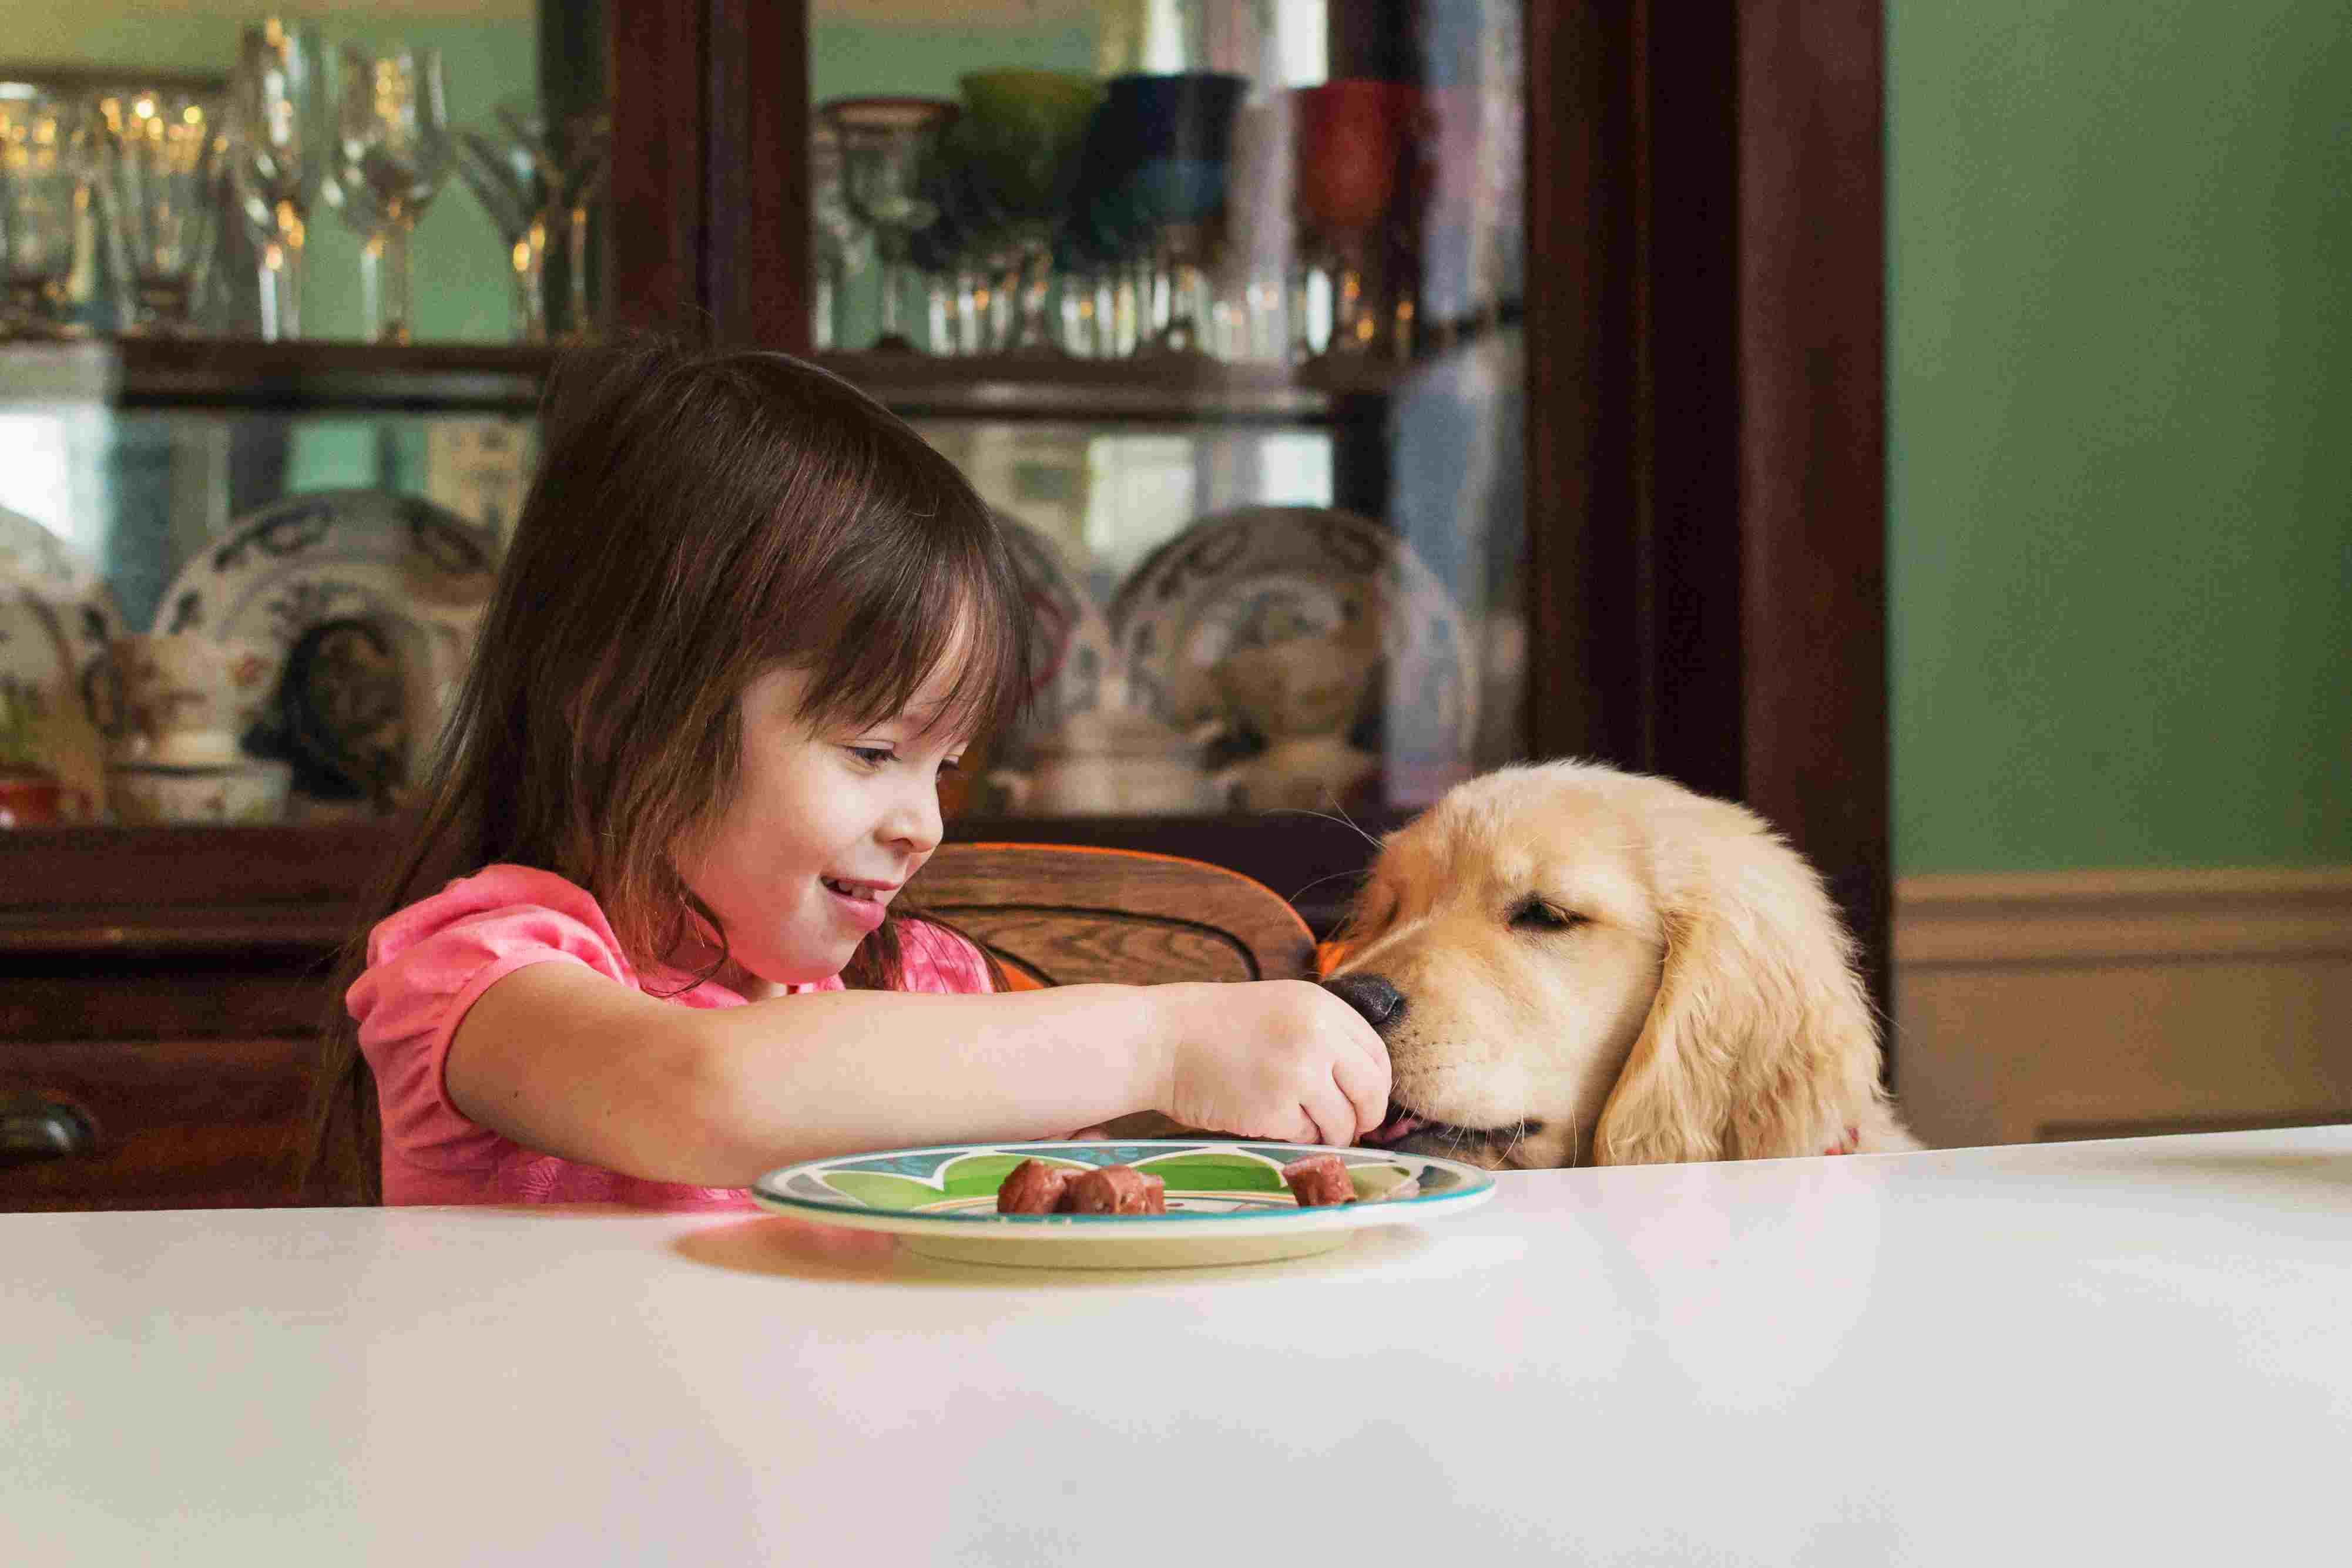 Girl feeding golden retriever puppy at table